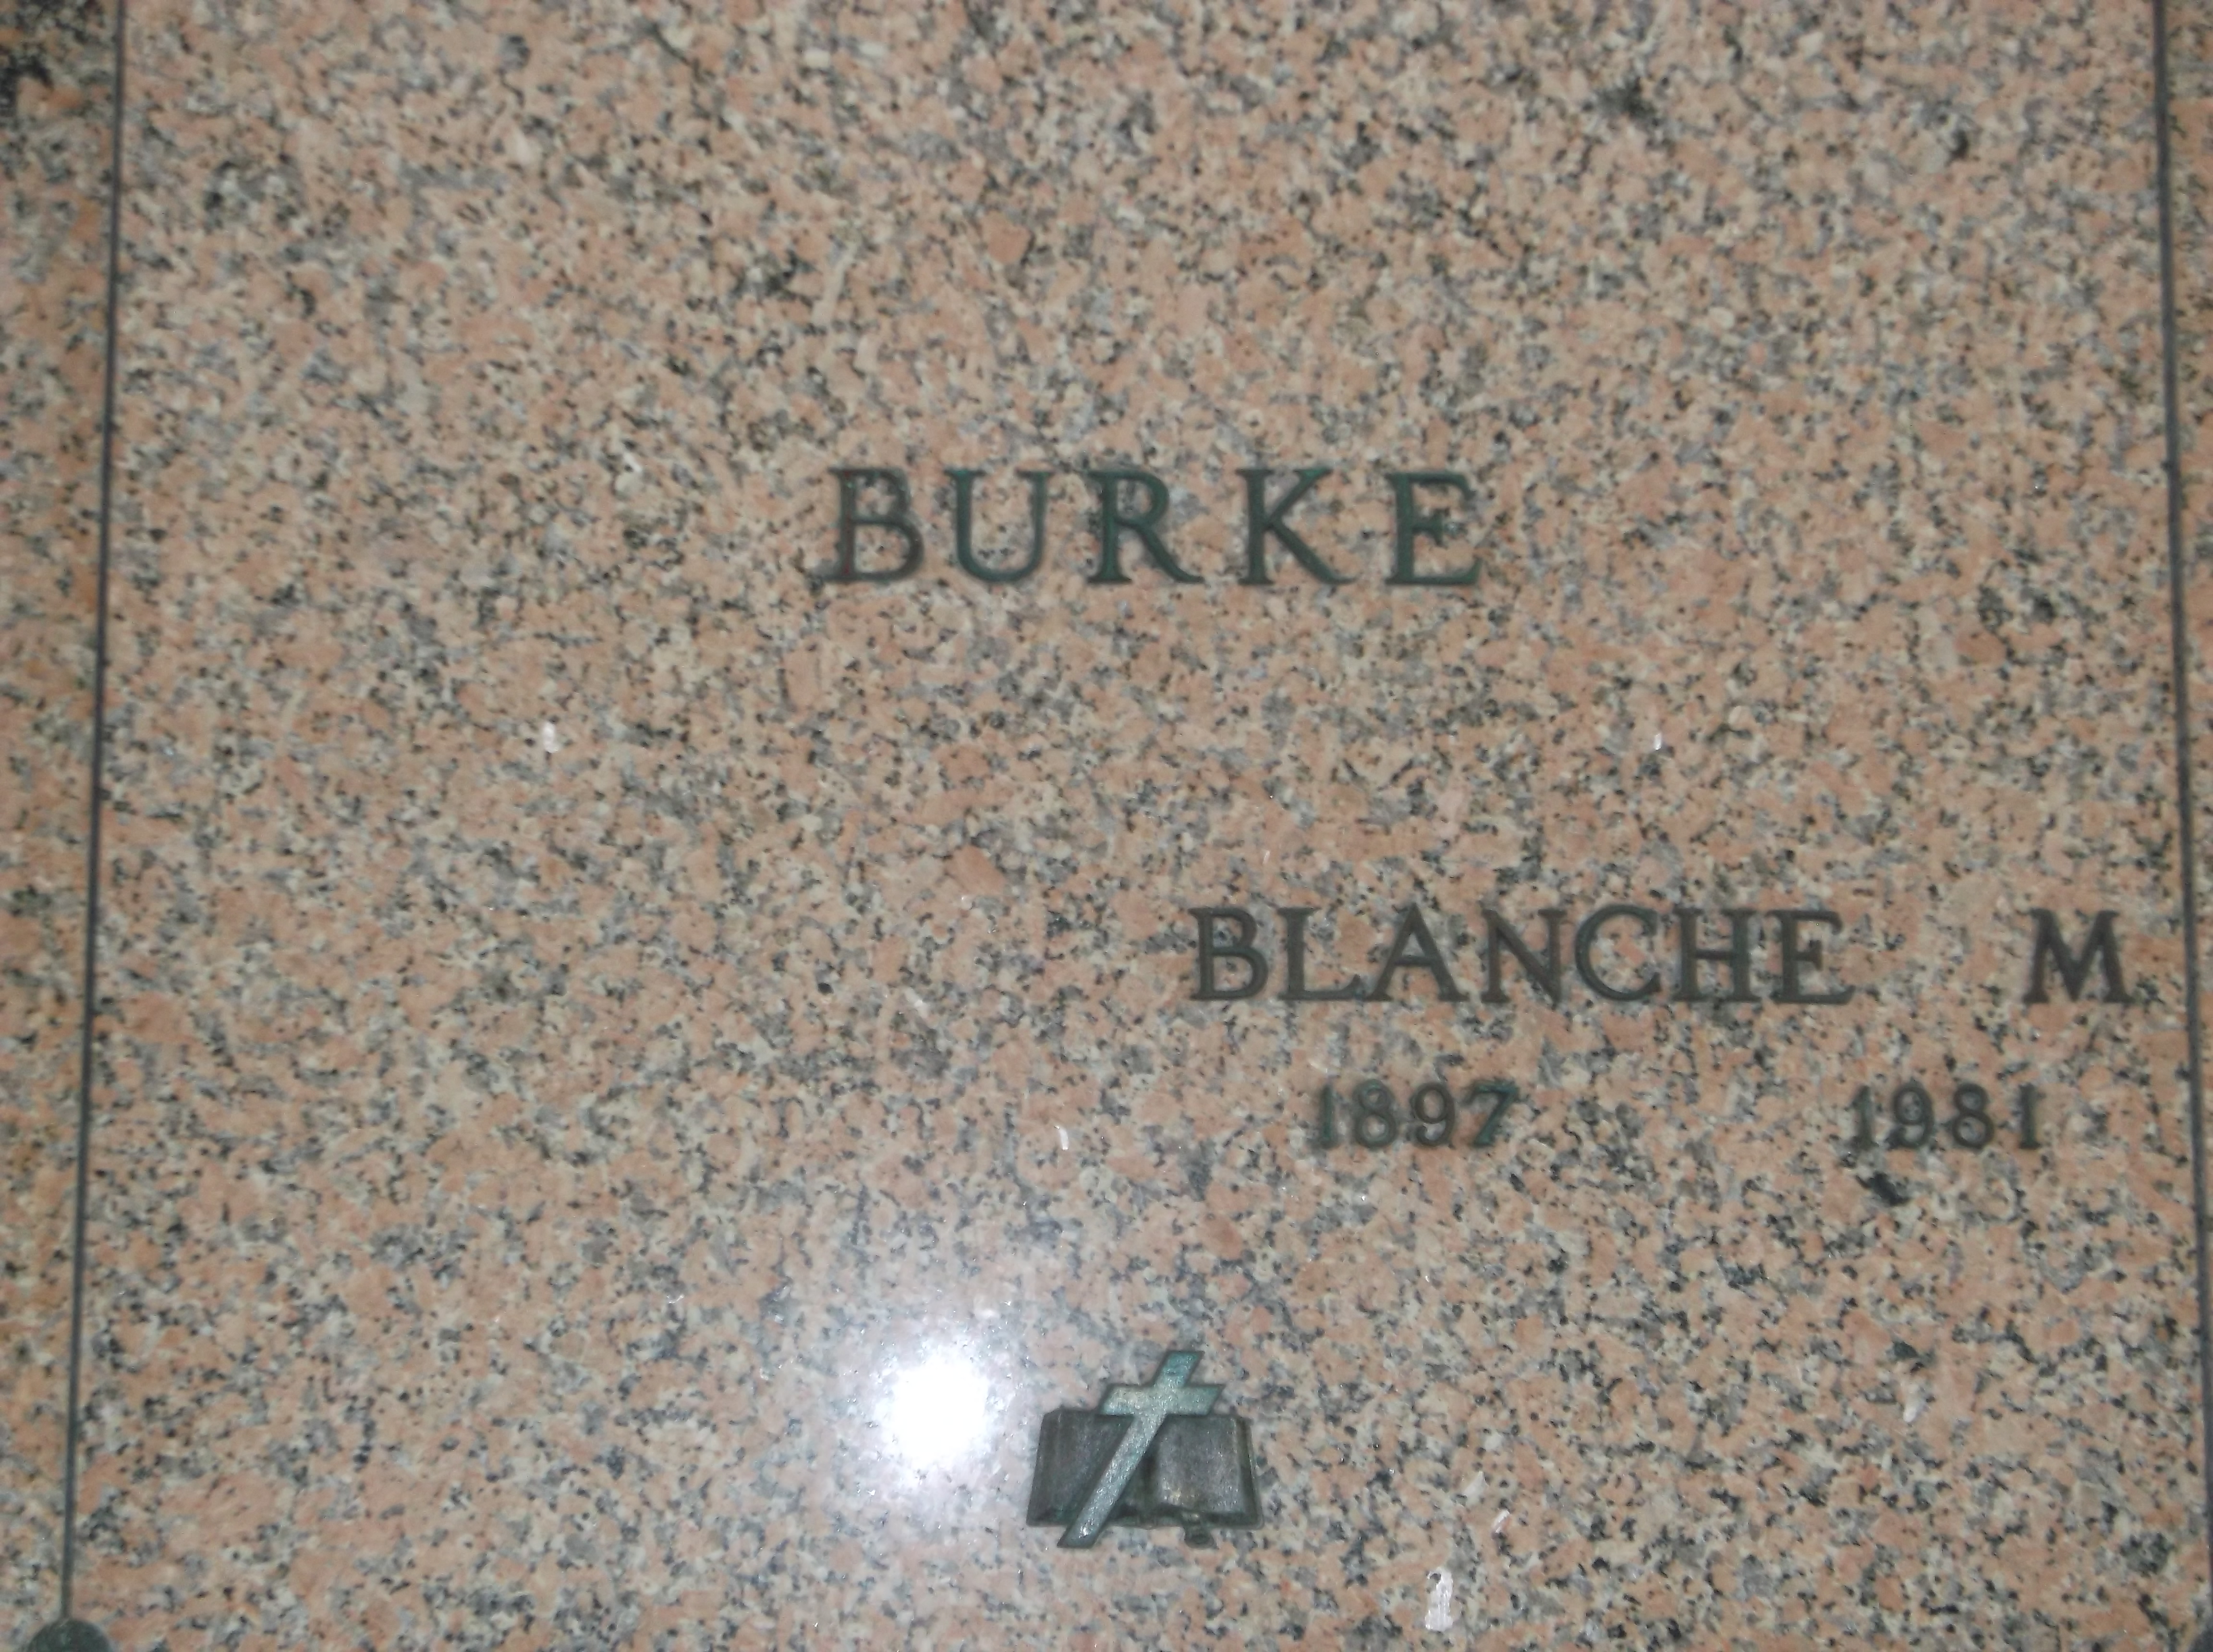 Blanche M Burke